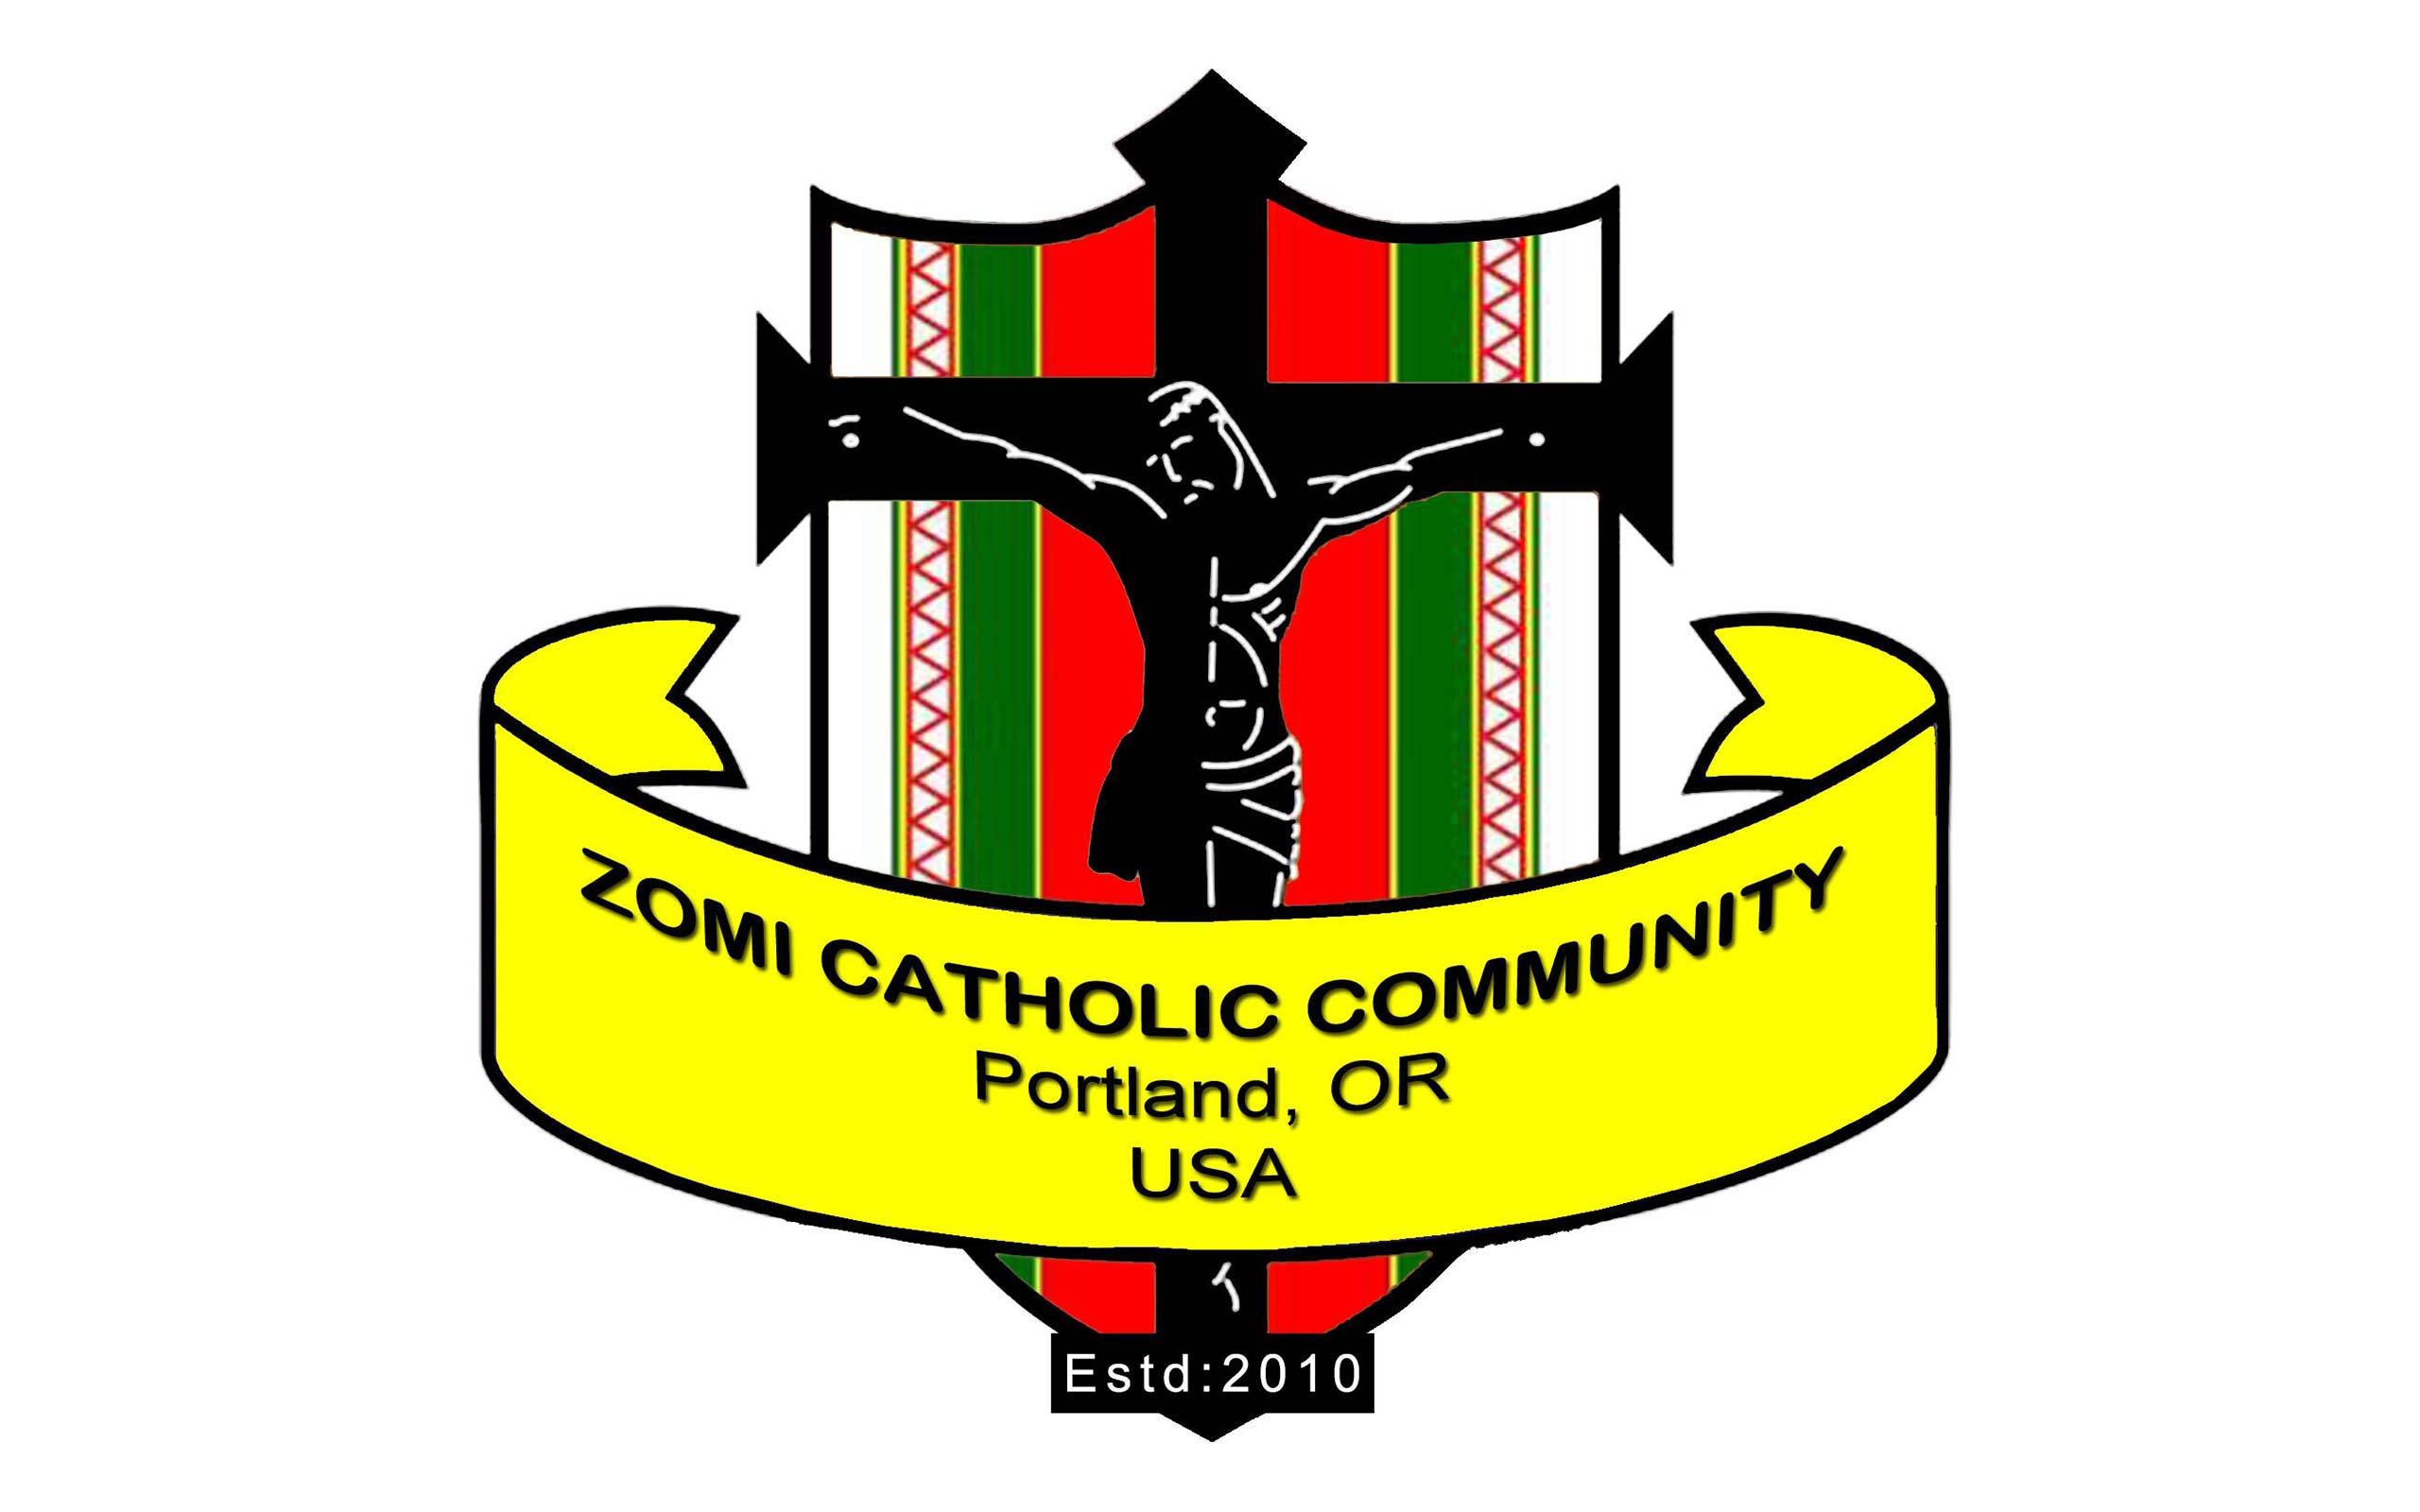 Zomi Catholic Community, Portland, OR